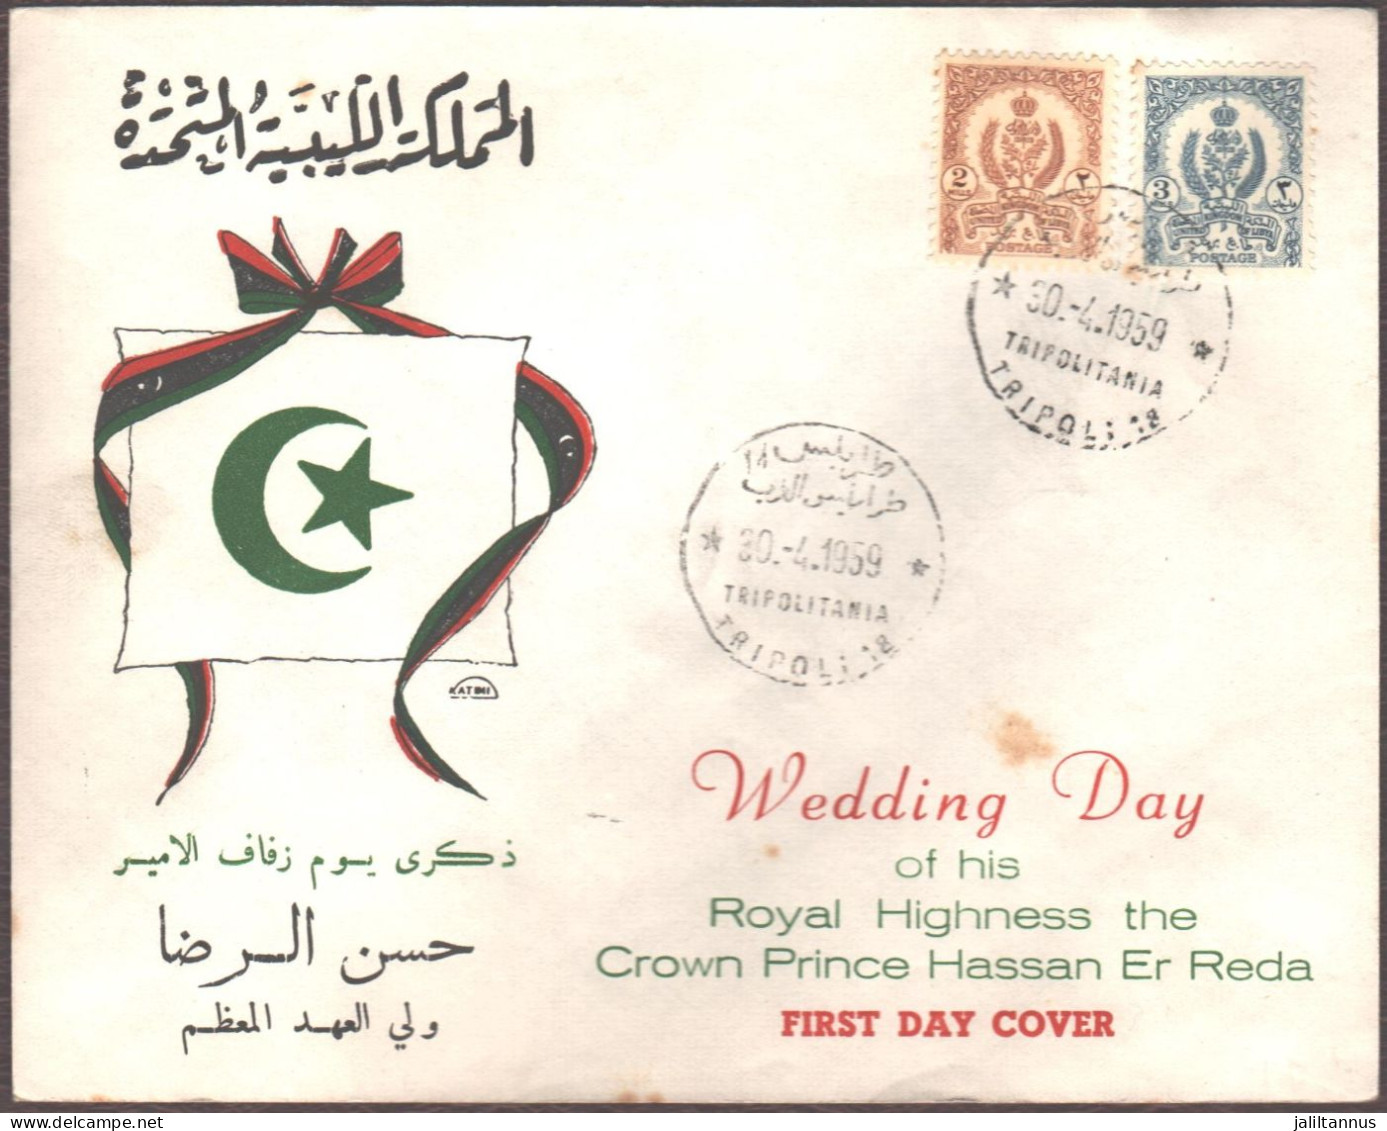 FDC  -UNITED KINGDOM OF LIBYA -  WEDDING DAY OF HIS ROYAL HIGHNESS THE CROWN PRINCE HASSAN ER REDA 1959 - Libyen